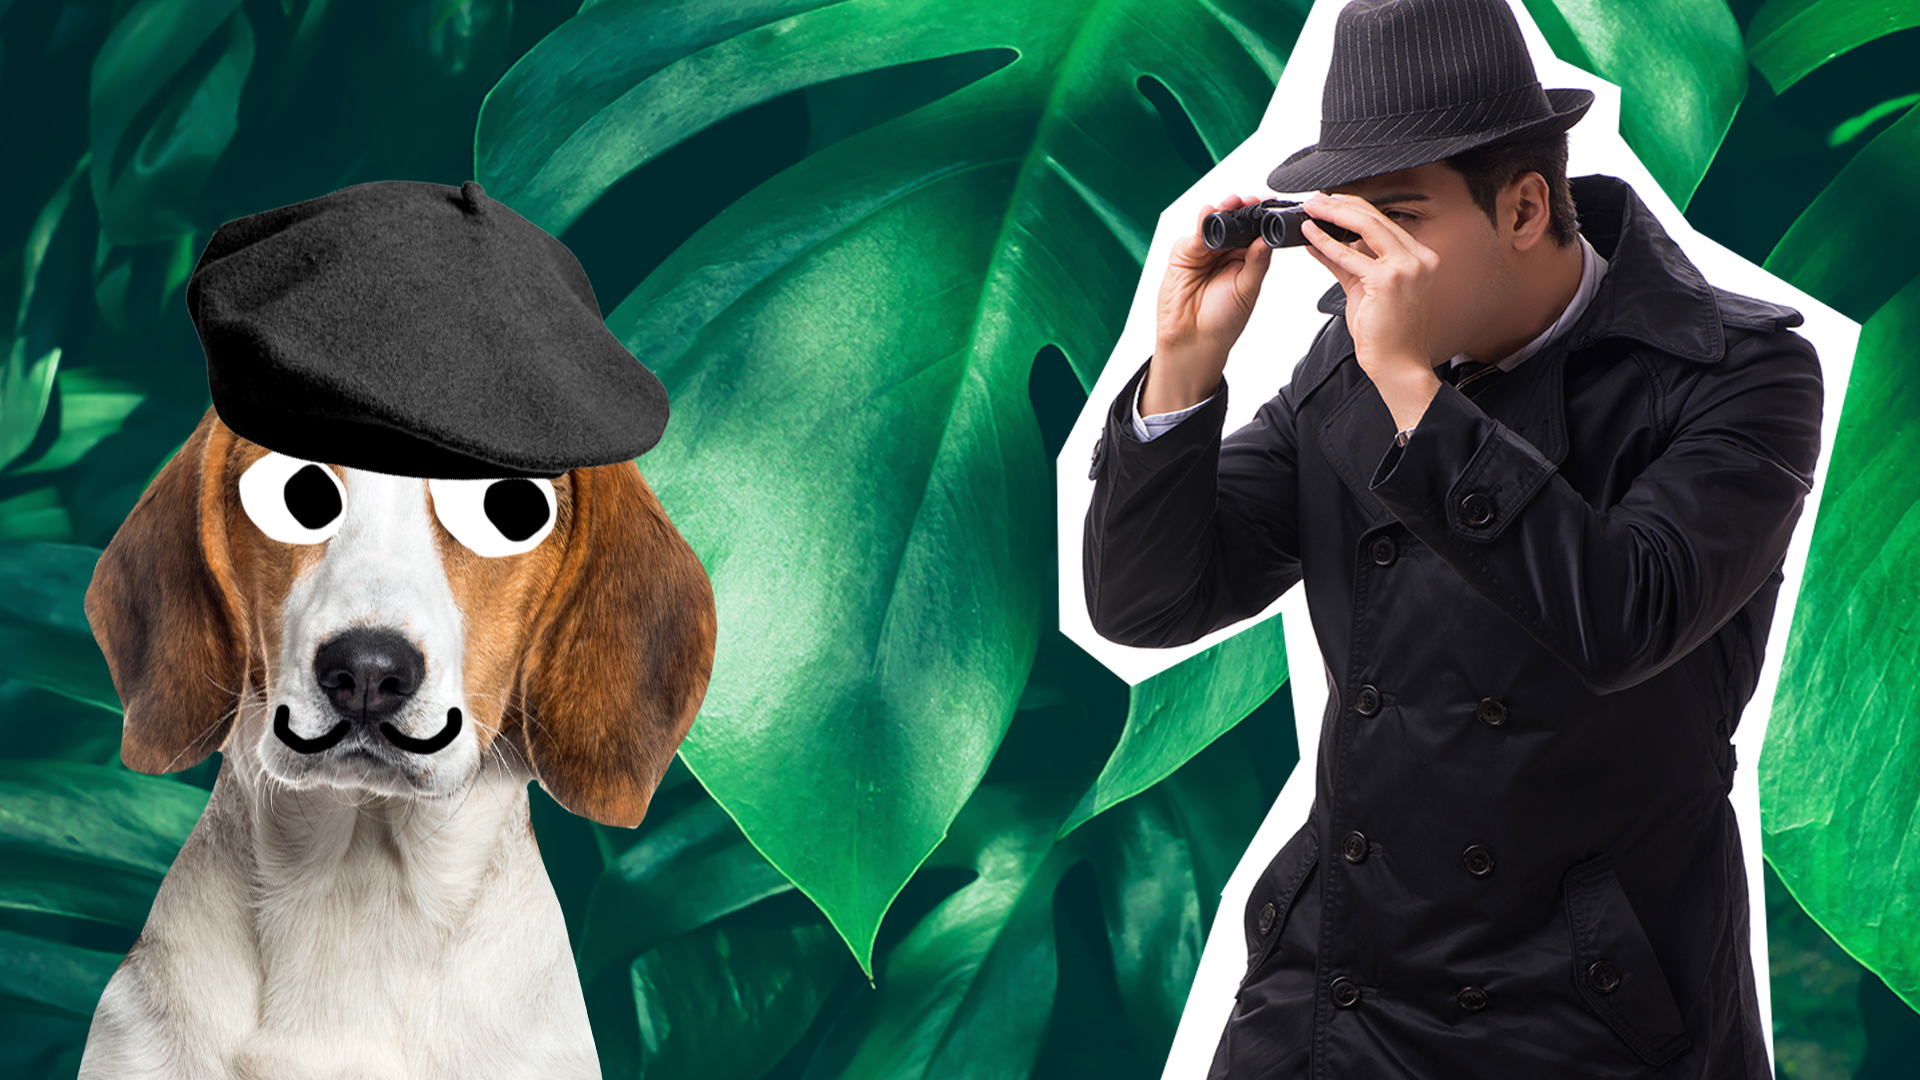 Spy spying on dog on leaves background